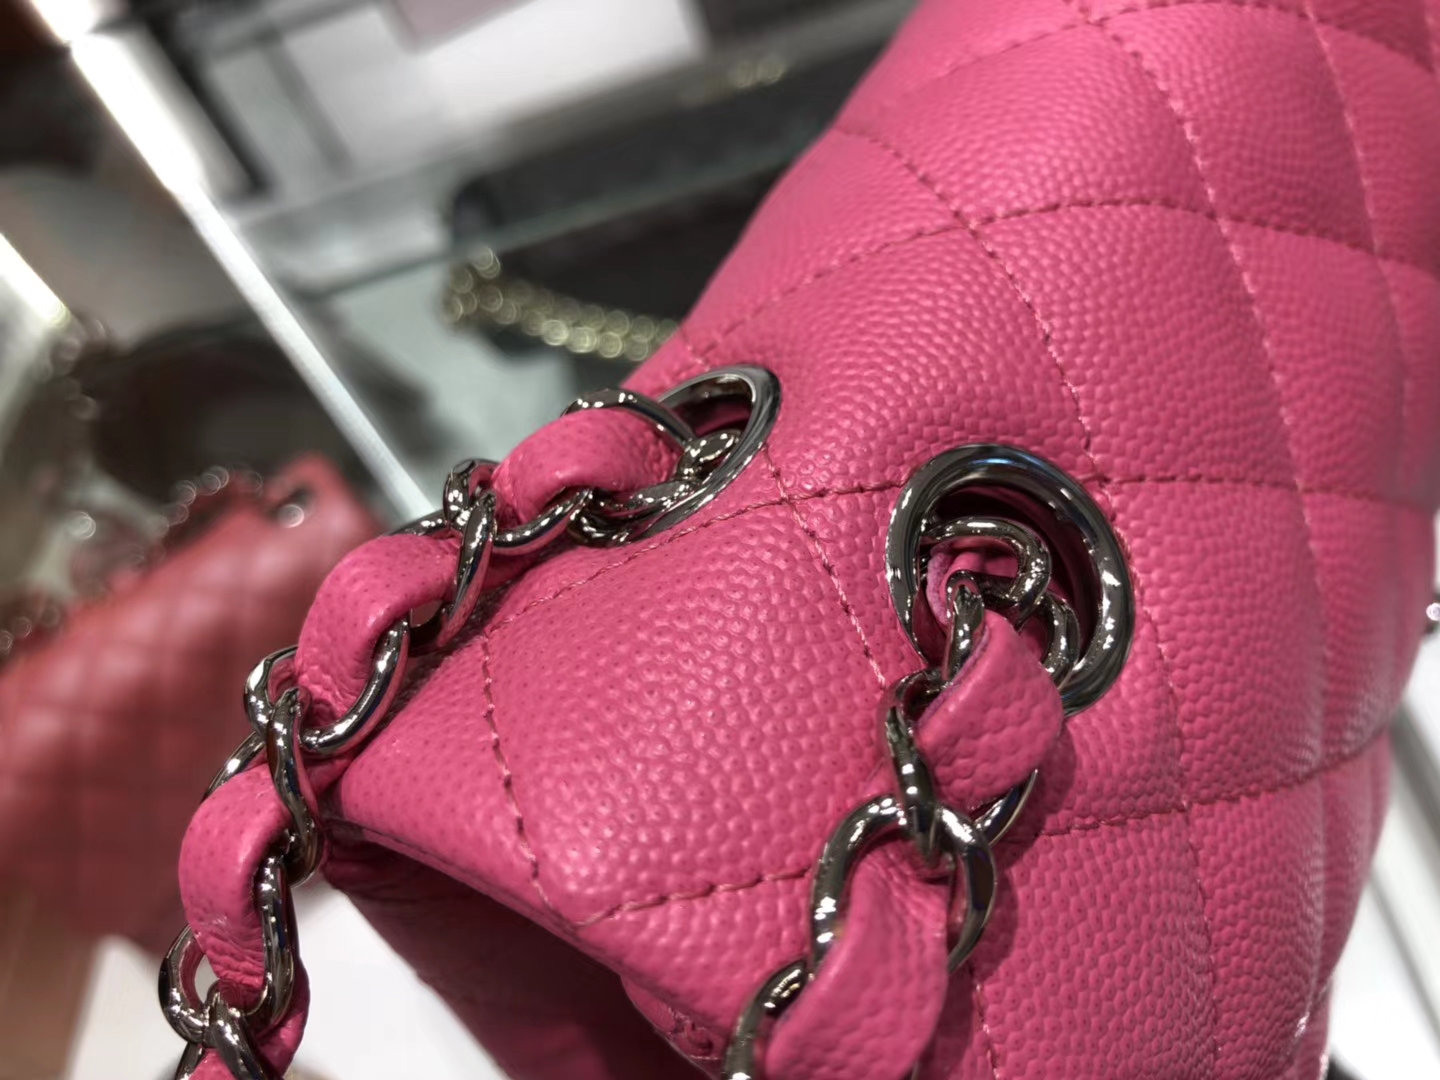 Chanel（香奈儿）cf # 链条包 玫红色 银扣 银链 25cm